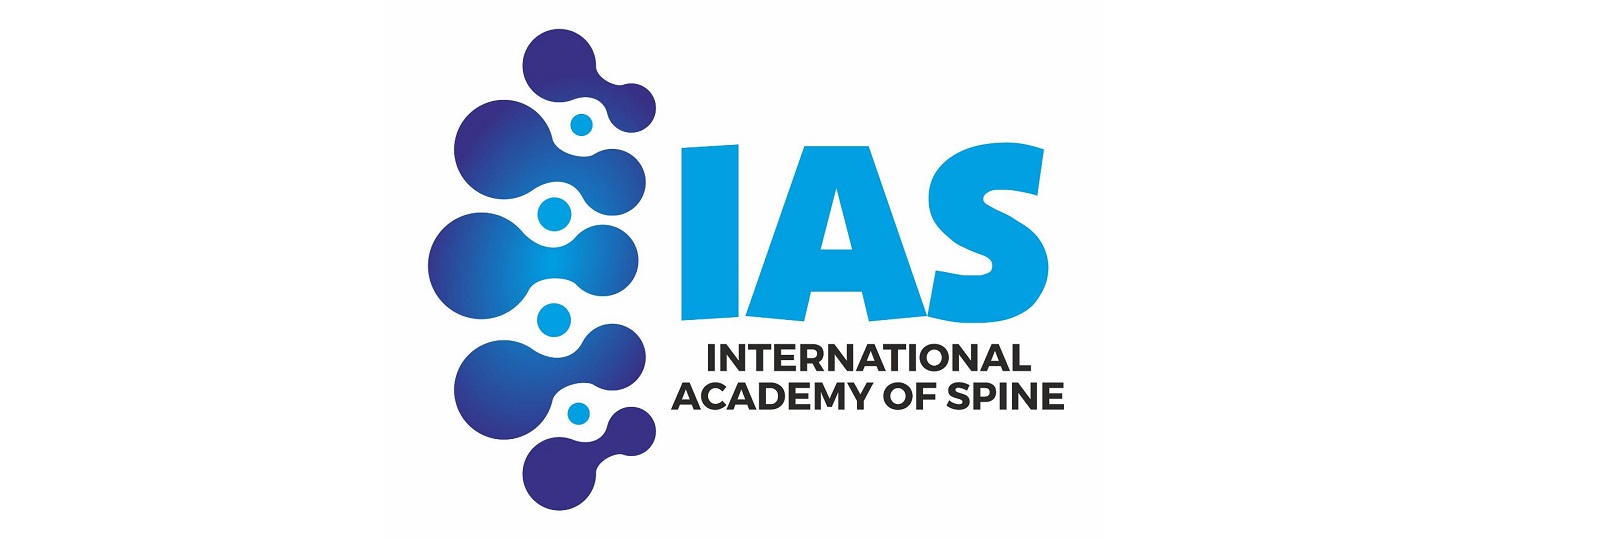 International Academy of Spine